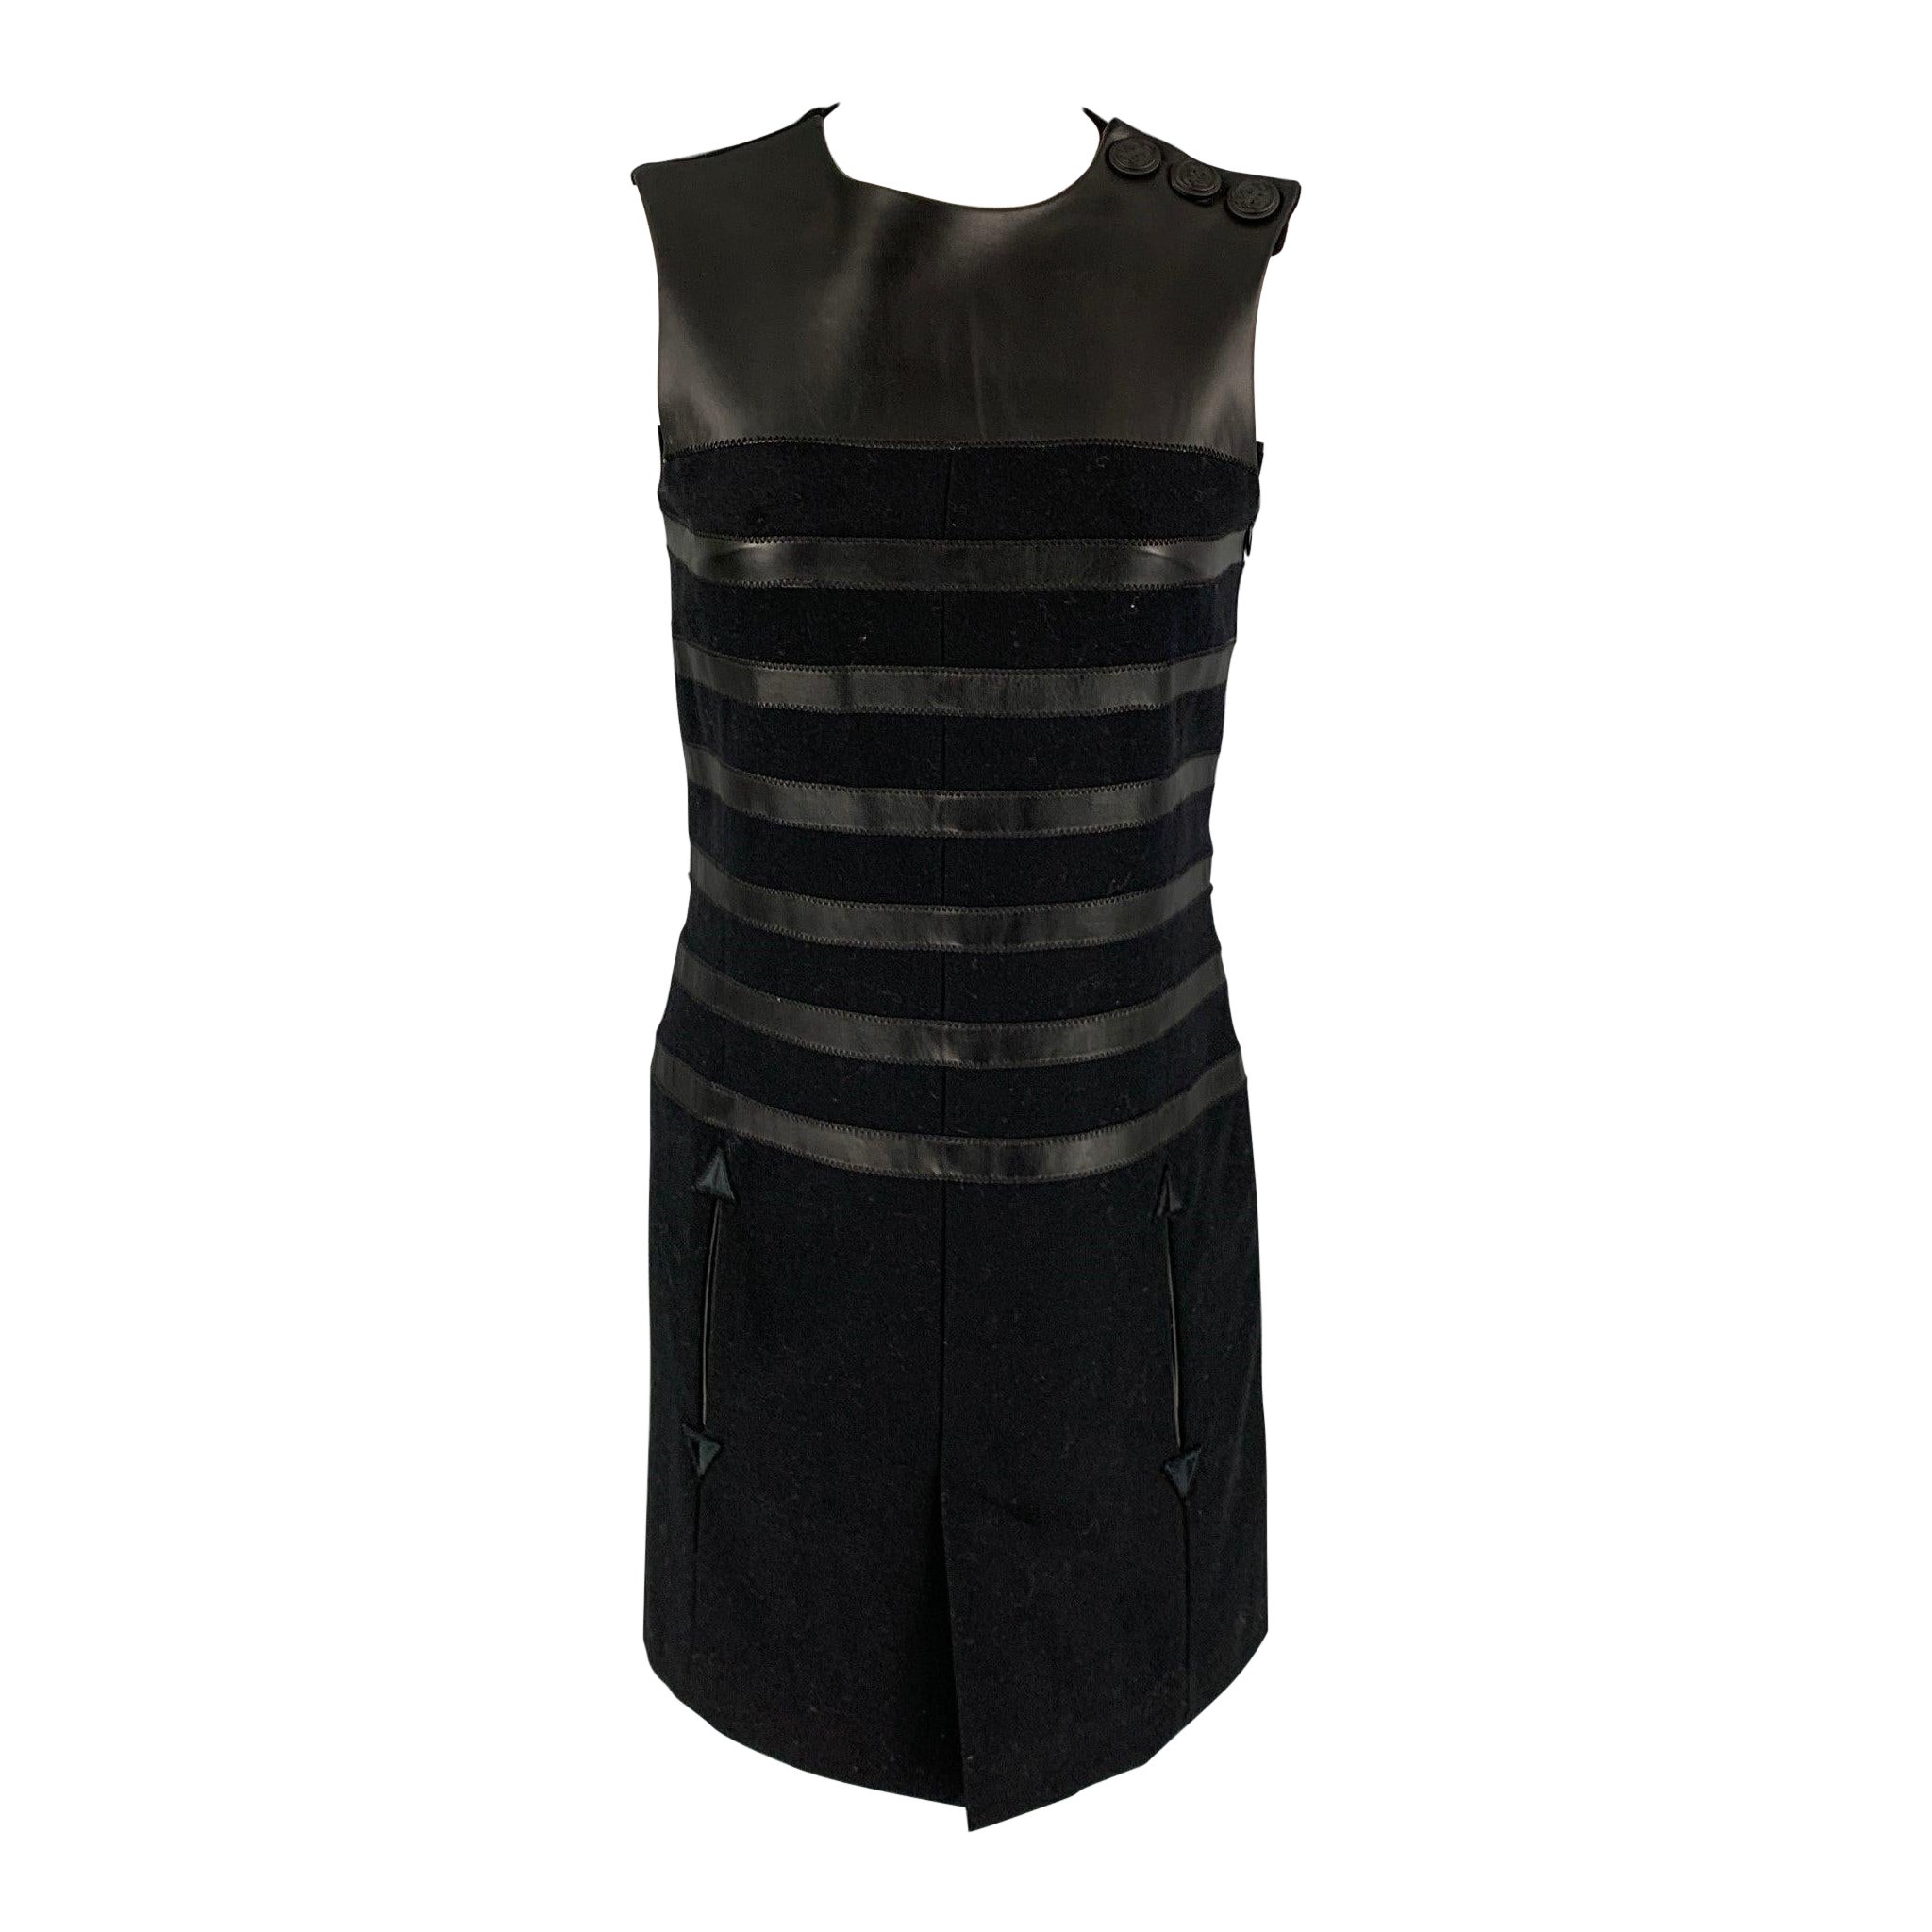 JEAN PAUL GAULTIER Size 6 Black Wool Blend Mixed Materials Shift Dress For Sale